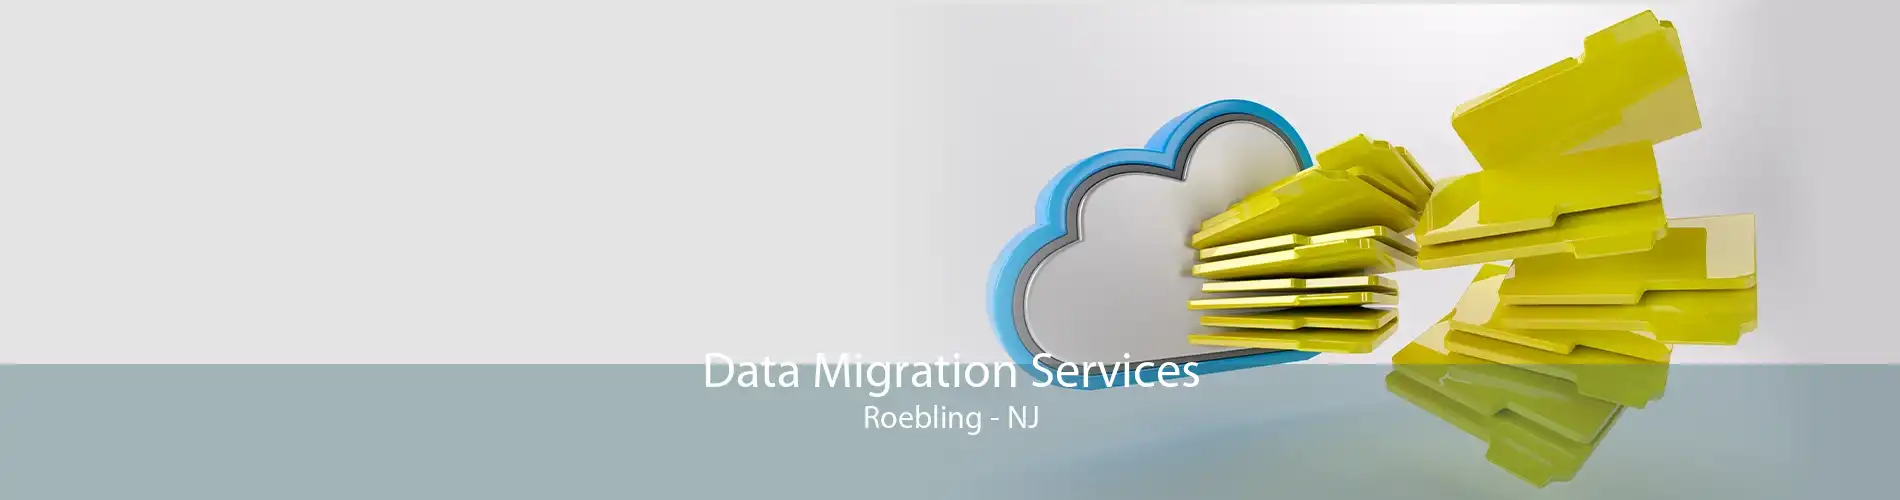 Data Migration Services Roebling - NJ